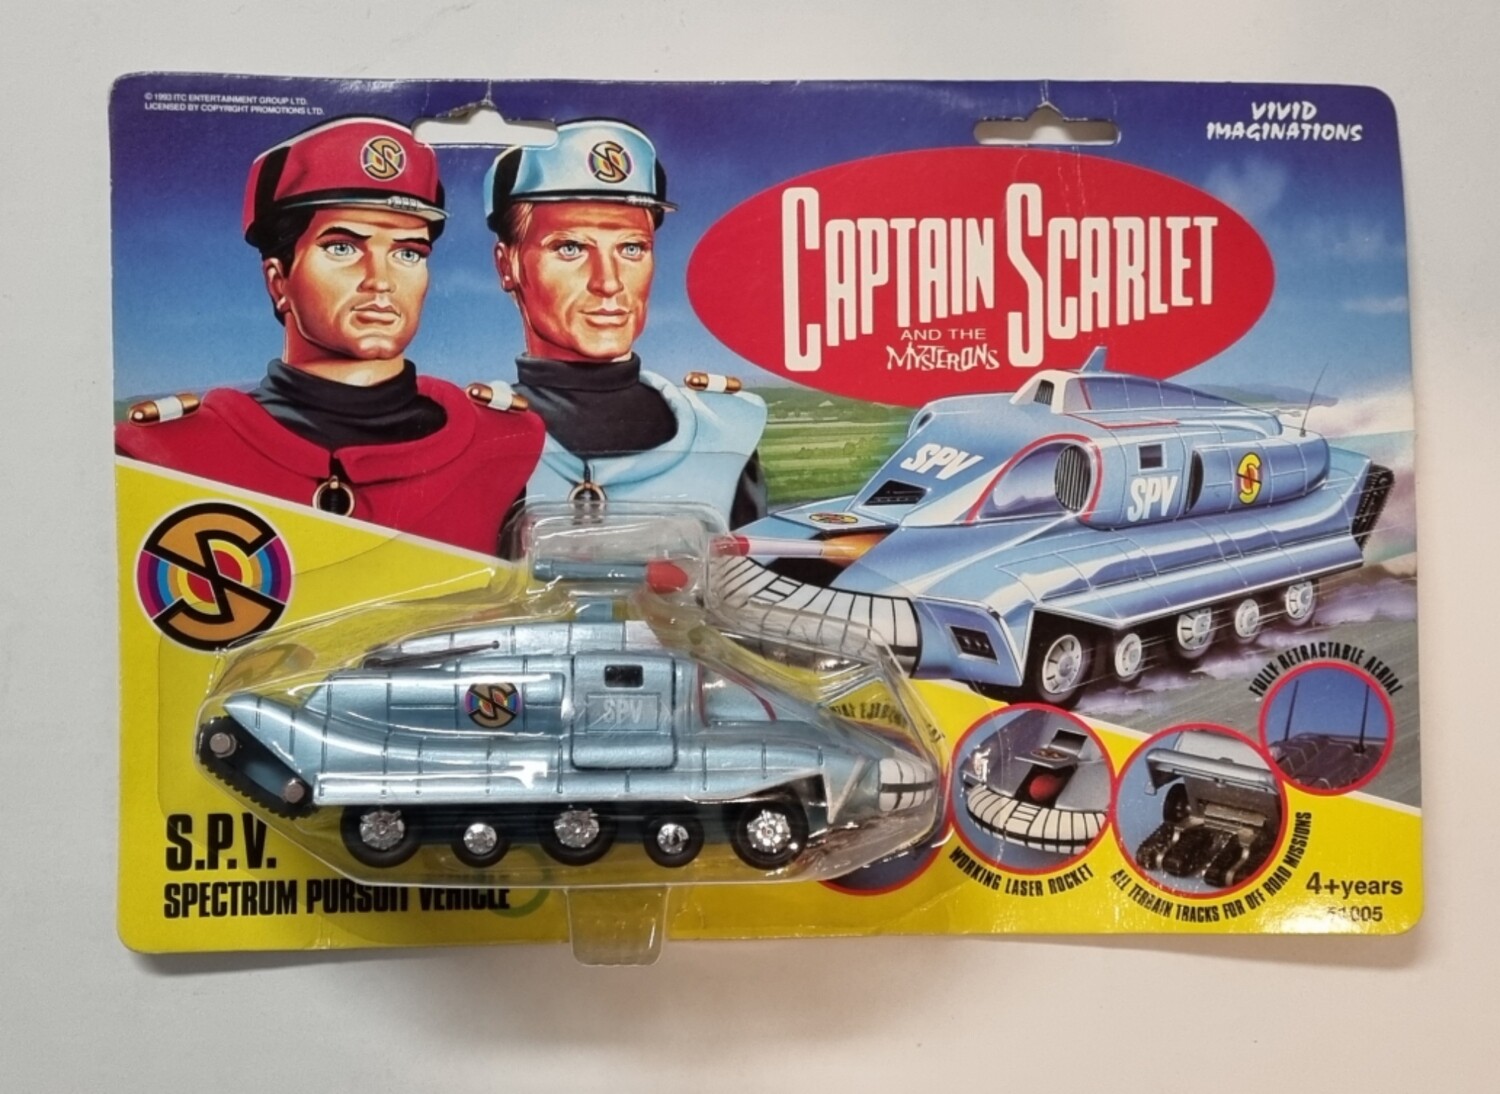 S.P.V. Spectrum Pursuit Vehicle, Captain Scarlet and the Mysterons, 1993